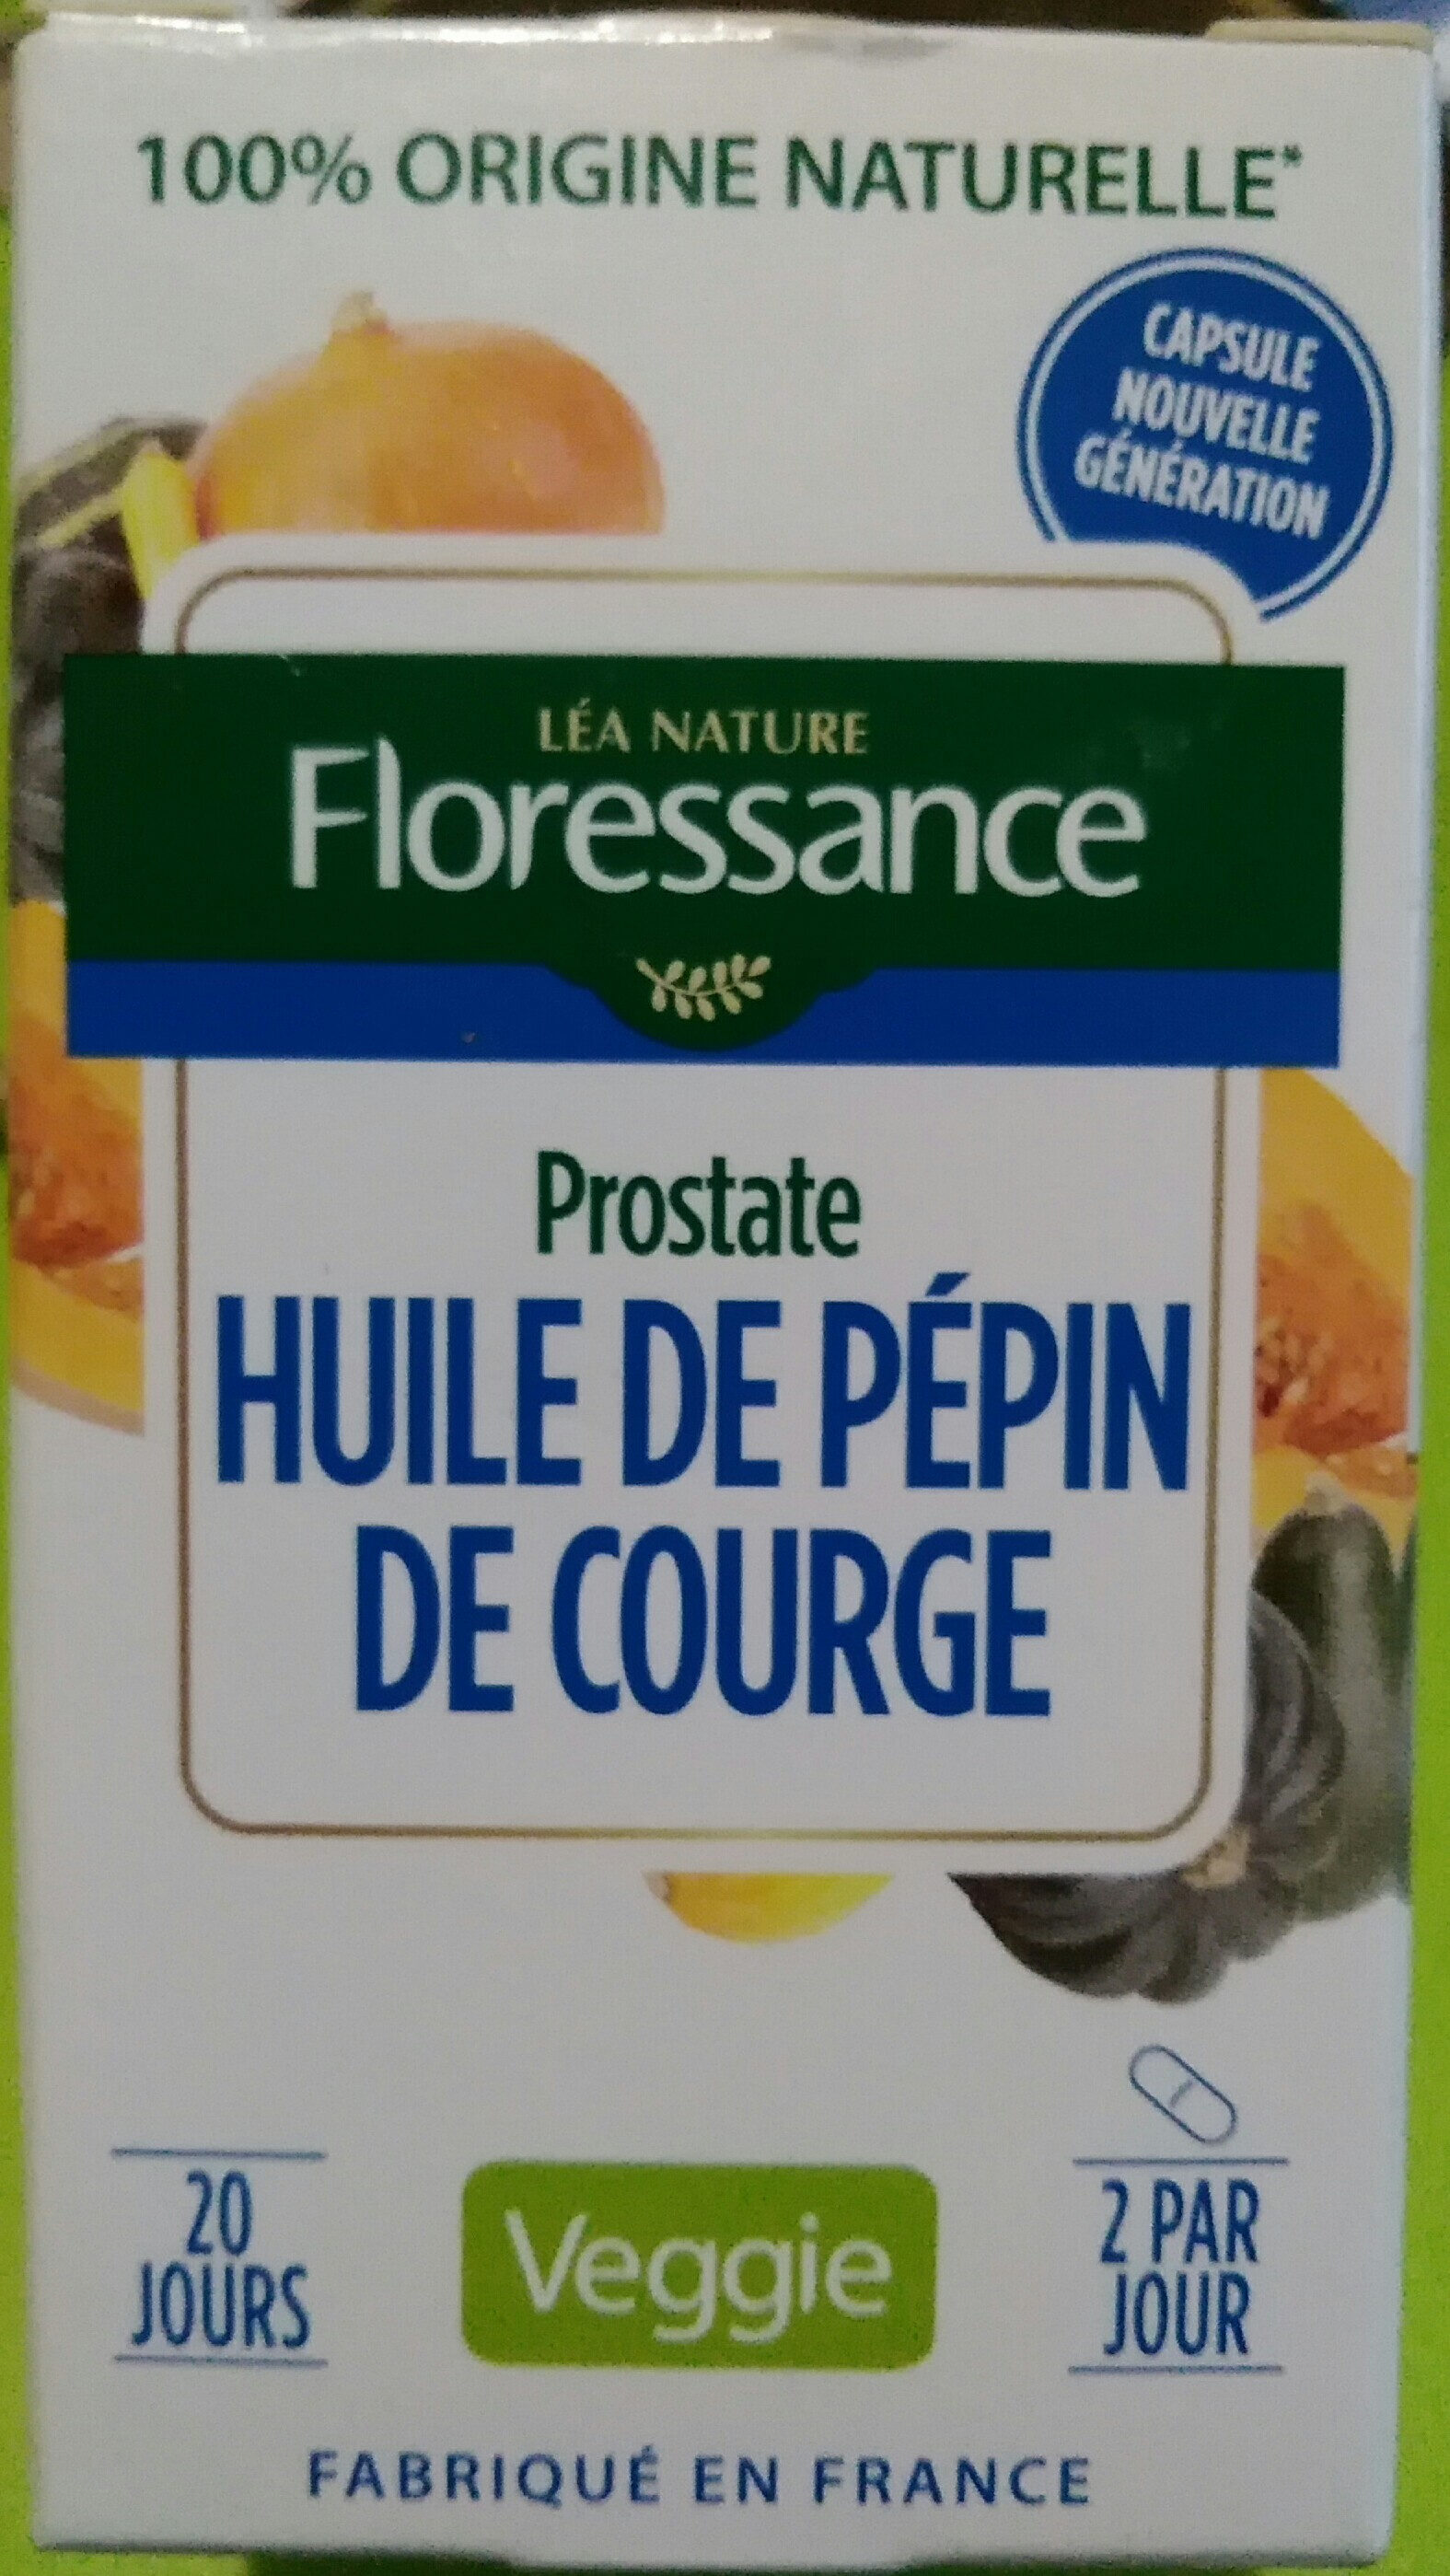 Capsule Huile De Pépin De Courge - Prostate - Product - fr